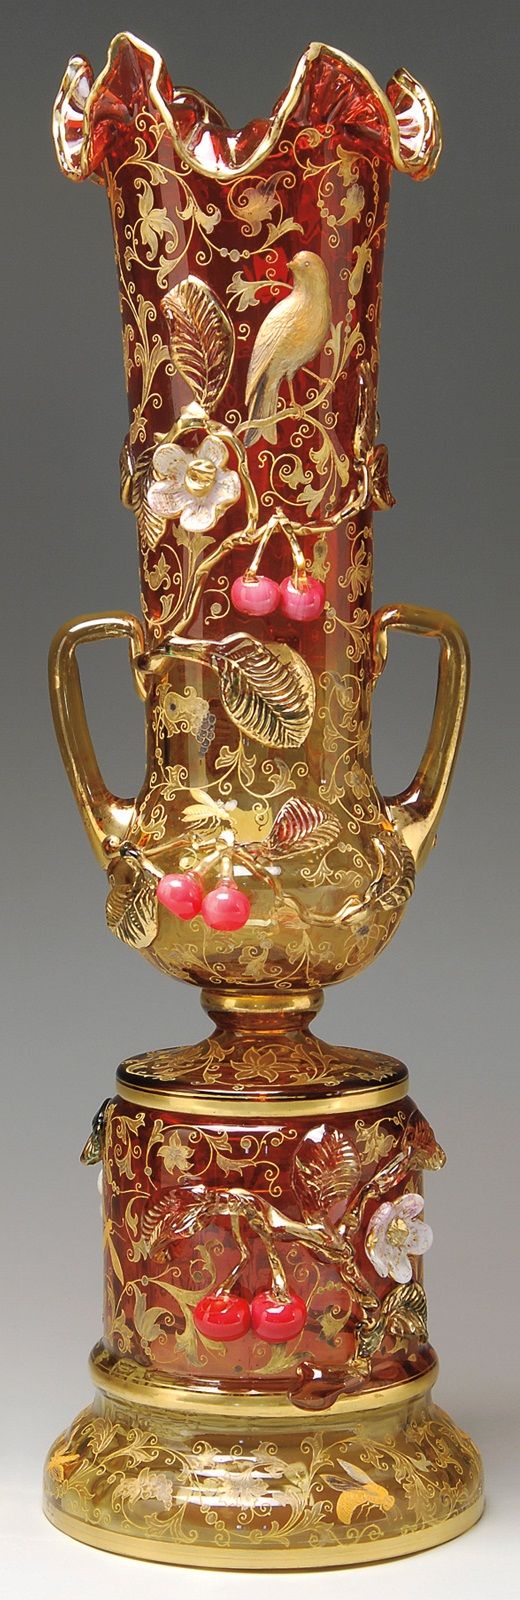 Ornate Moser Bohemian glass vase, late 19th century.